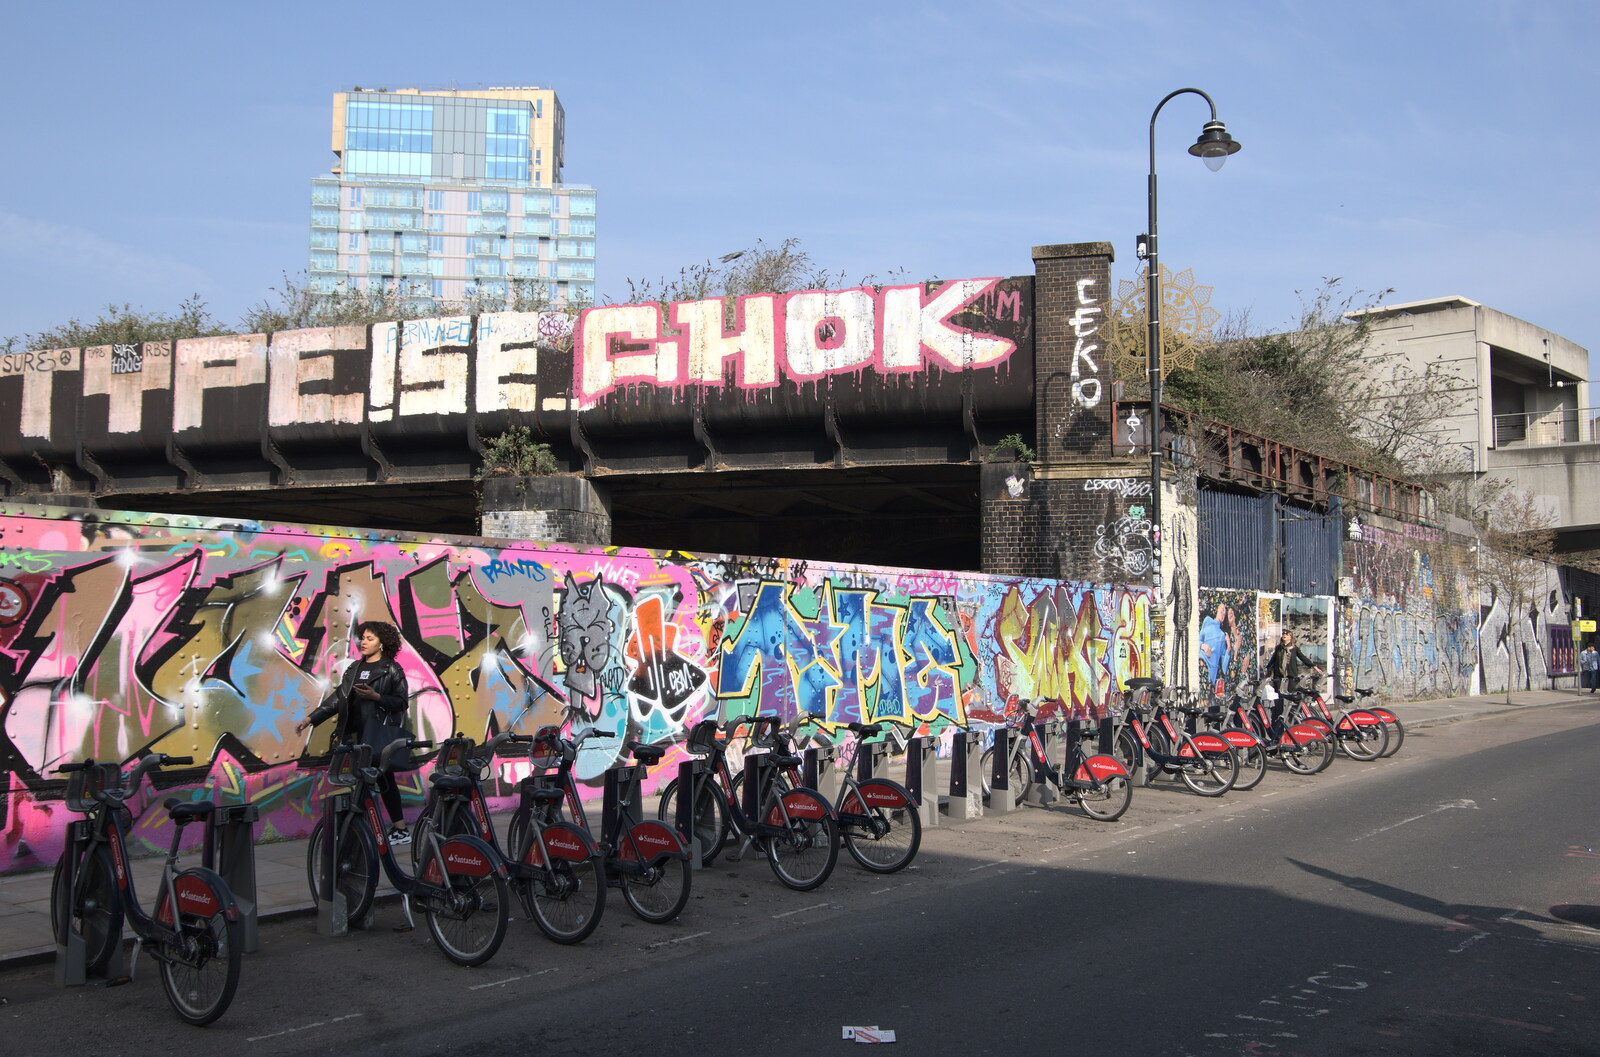 A Walk Around the South Bank, London - 25th March 2022: Graffiti on the railway bridge